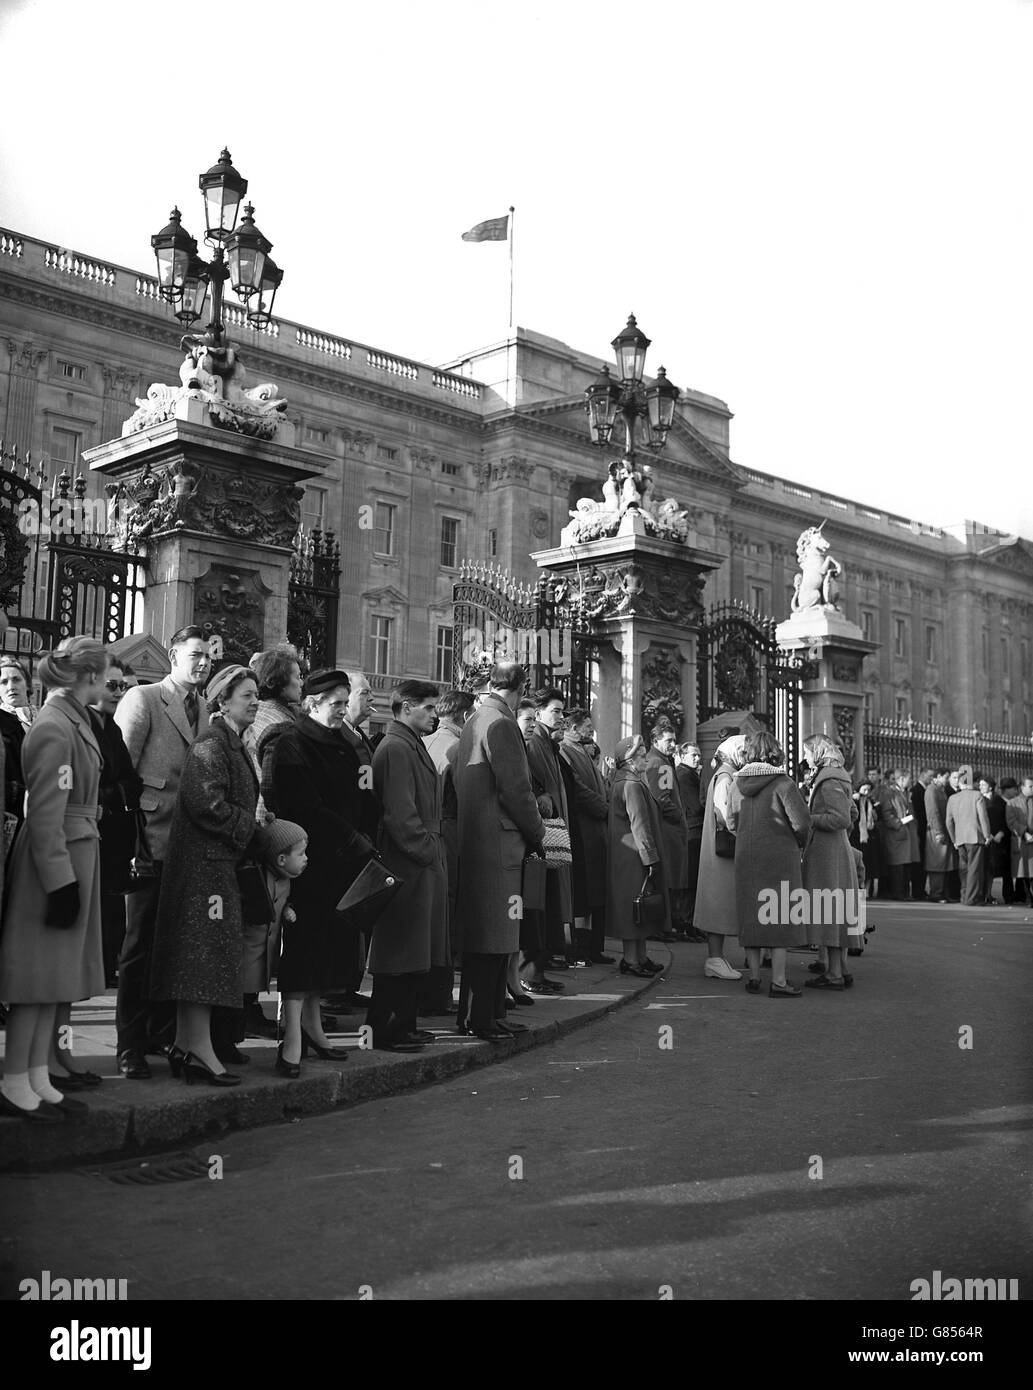 Politics - Harold Macmillan New Prime Minister - Buckingham Palace, London Stock Photo